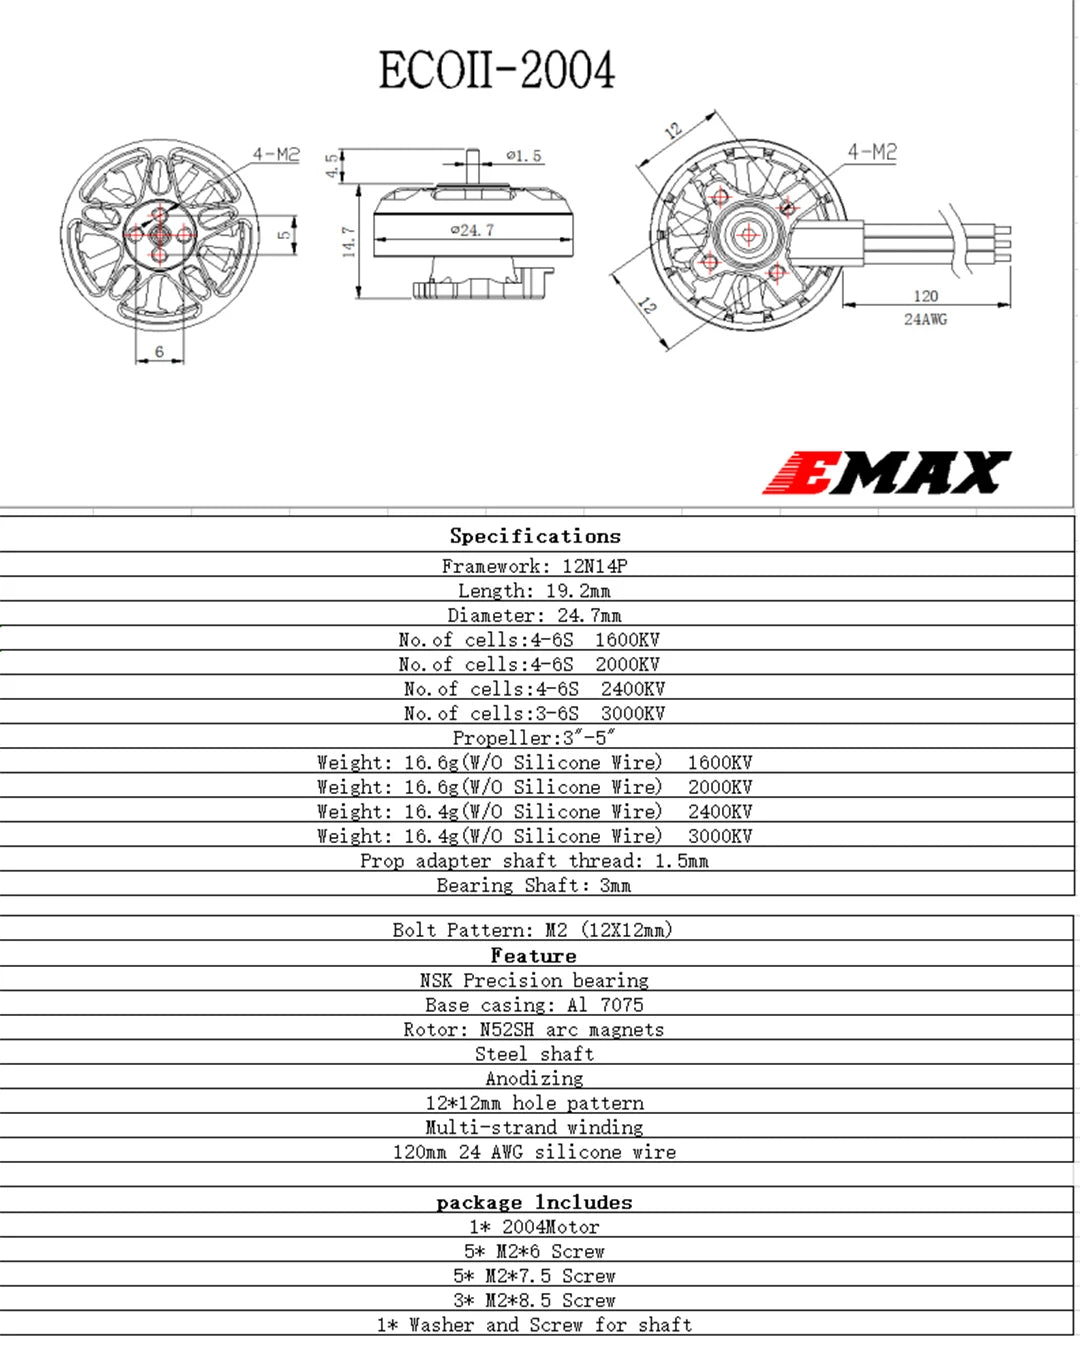 Emax ECO II Series 2004 Motor, ECOII-2004 M2 01.5 4-M2 0241 420 24